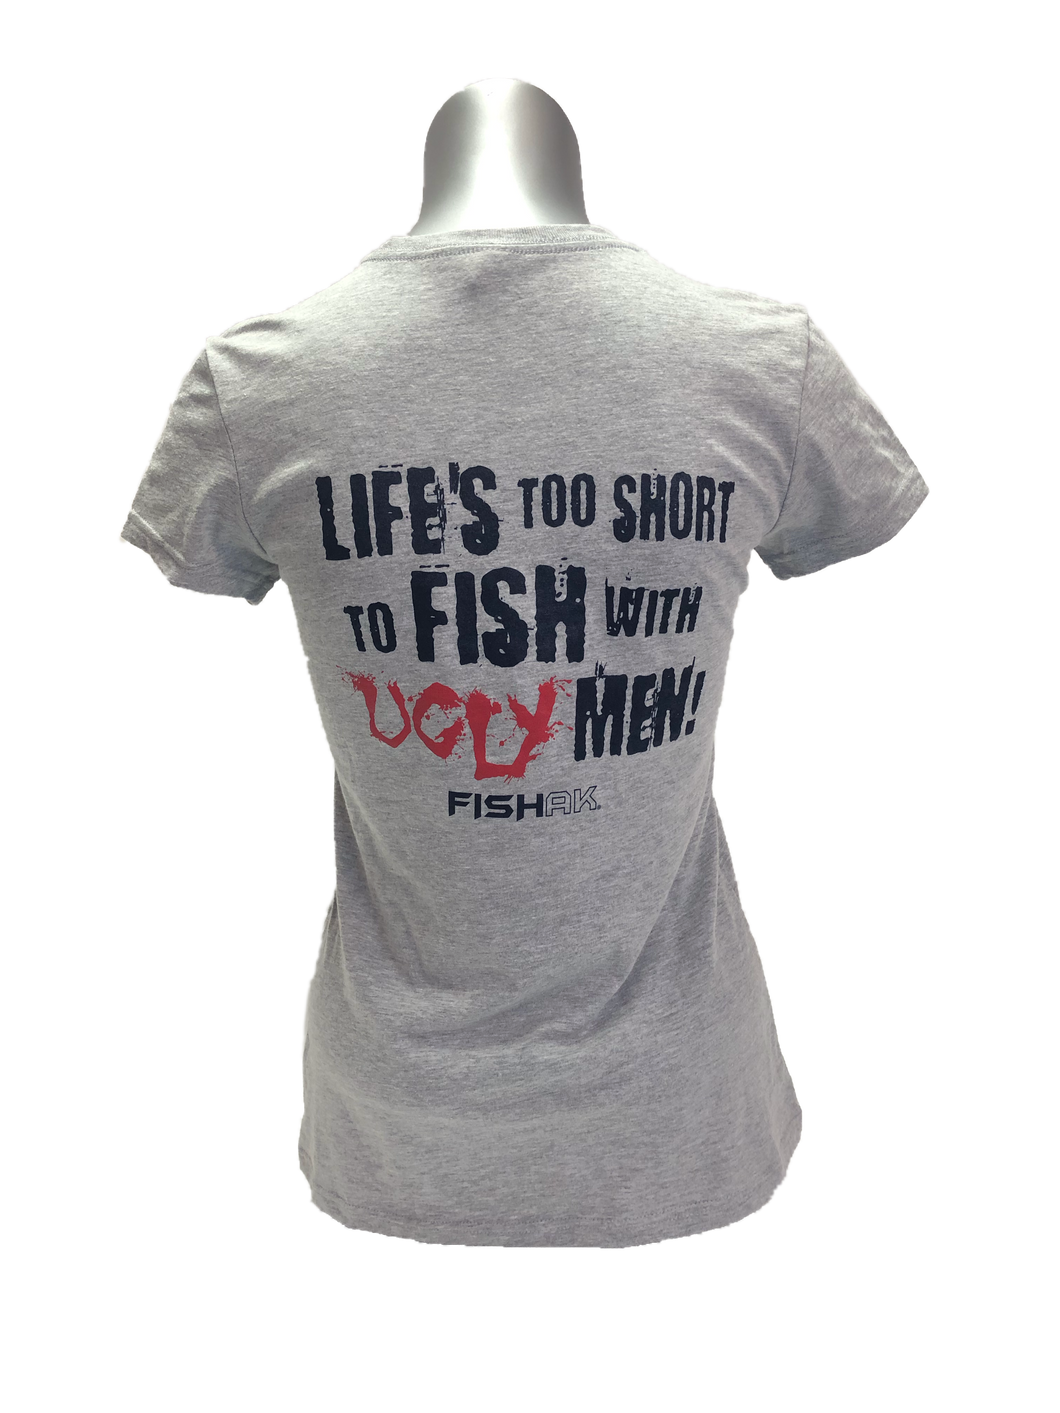 FISH AK Ugly Men - Ladies Fitted T-Shirt – Alaska Spiritwear, LLC